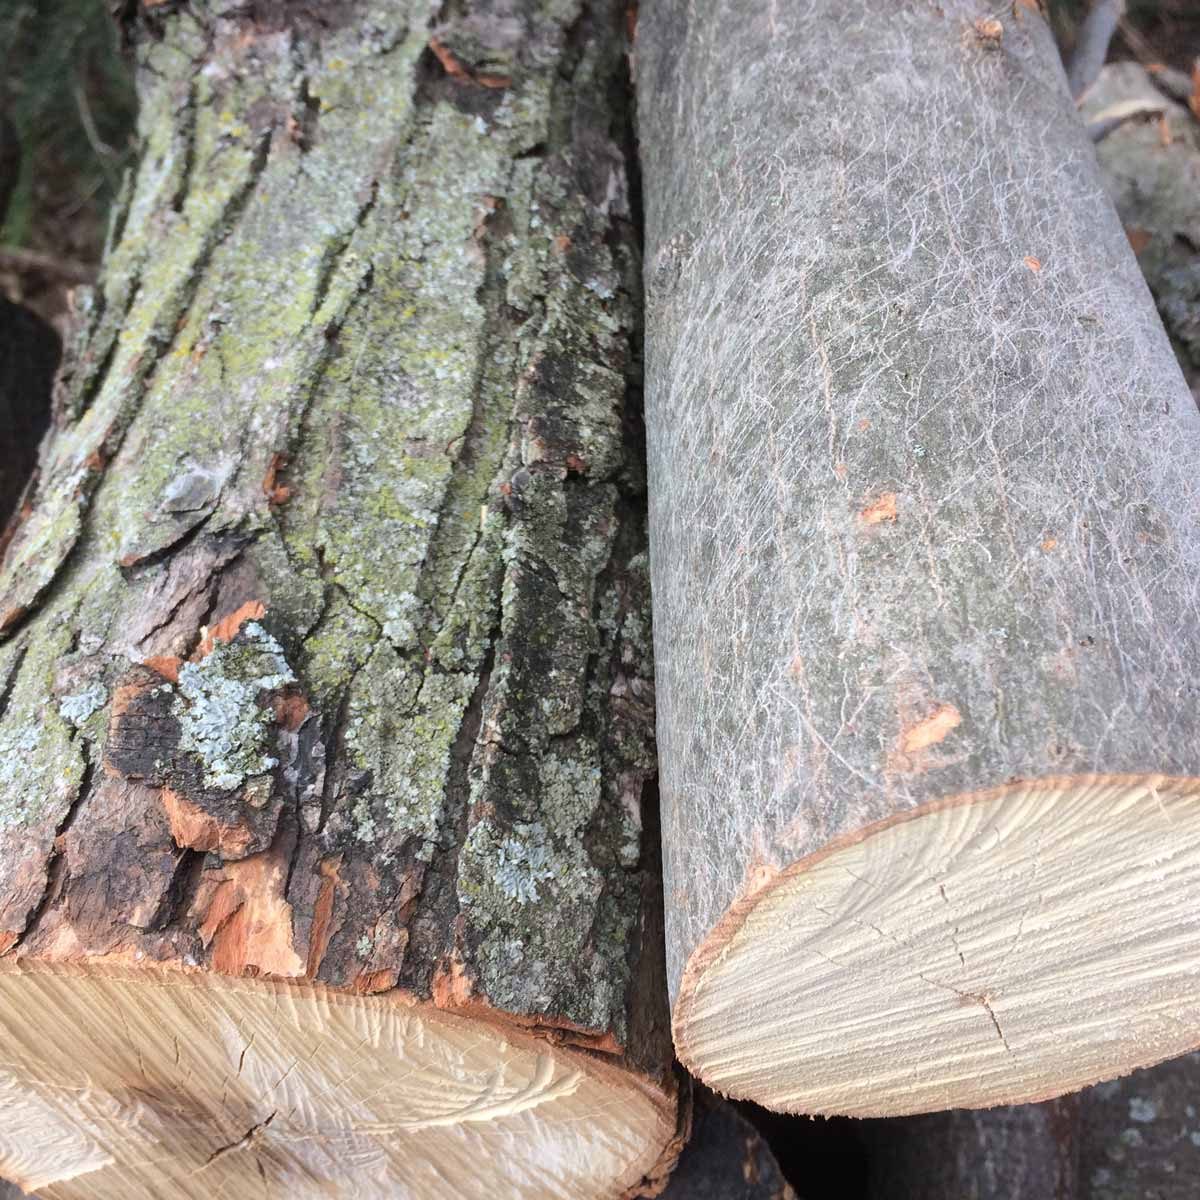 Uk Tree Bark Identification Chart